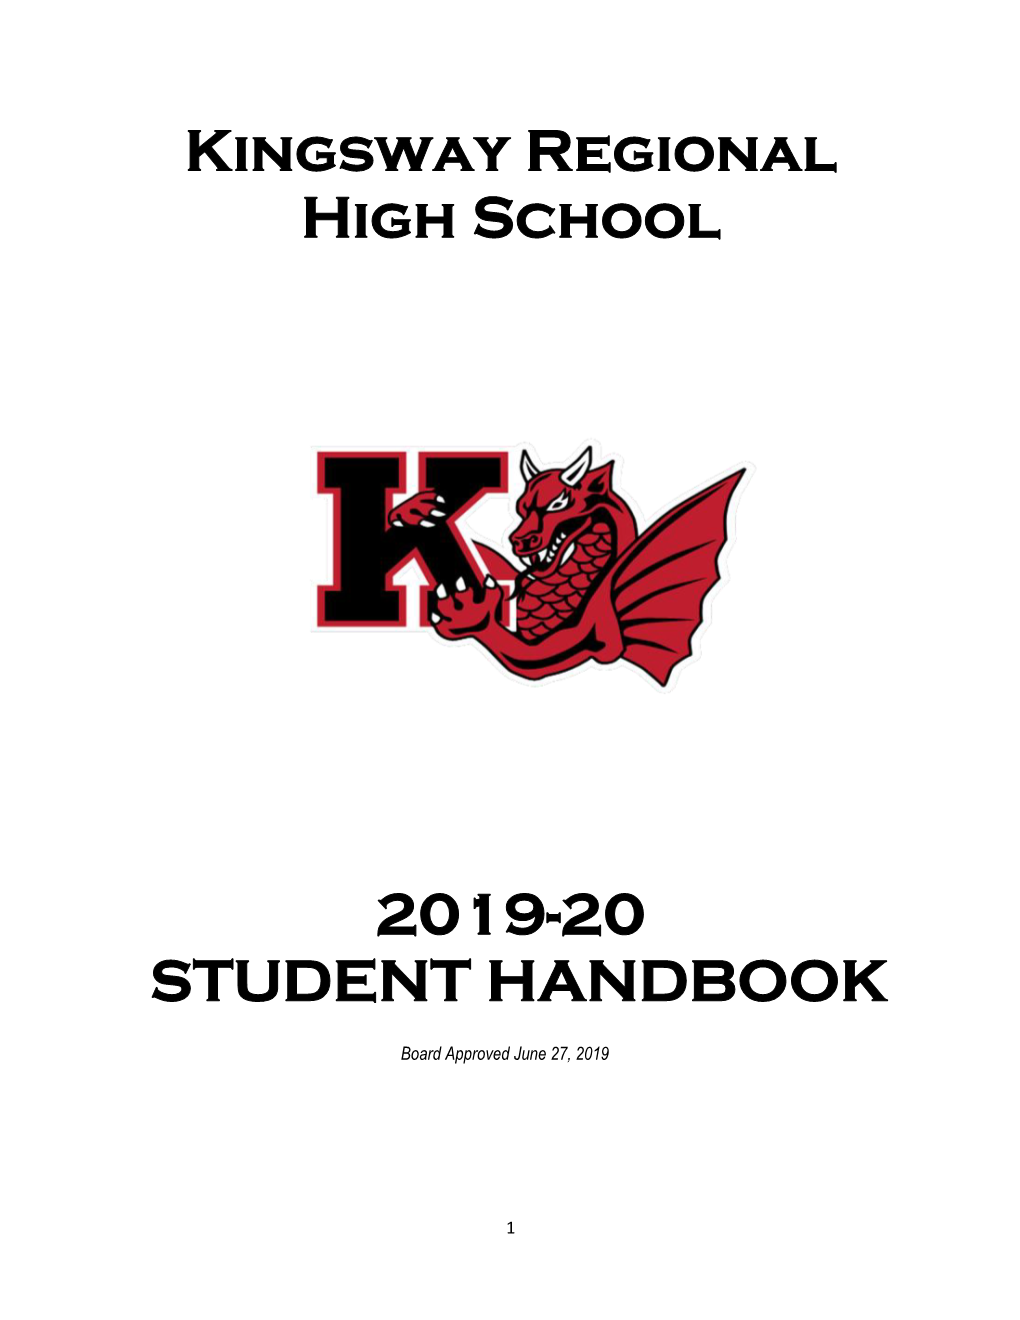 HIGH SCHOOL STUDENT HANDBOOK 2019-20 | Approved June 27, 2019